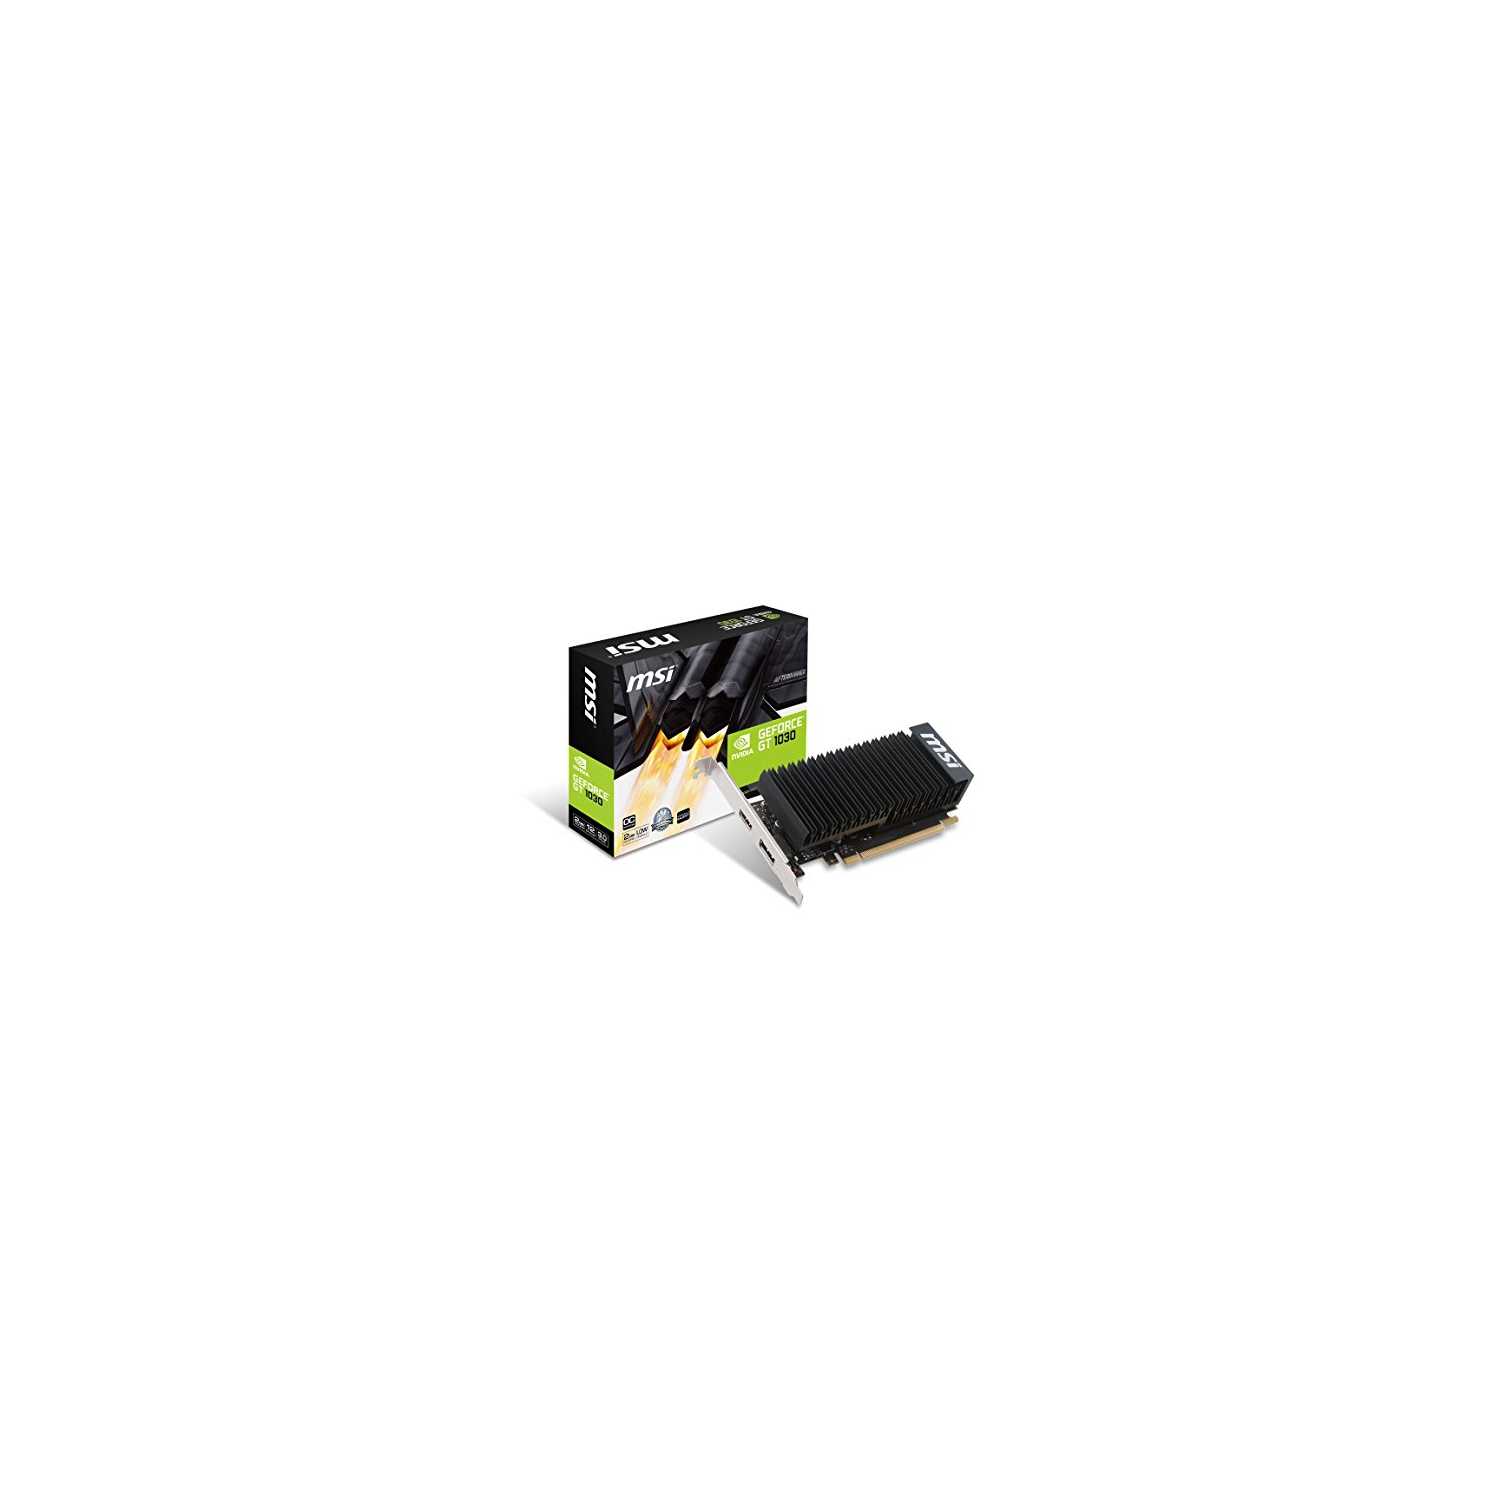 MSI GeForce GT 1030 2GH LP OC 2 GB GDDR5 64-bit Silent Heatsink, DisplayPort / HDMI, Video Card (Low Profile Bracket included)